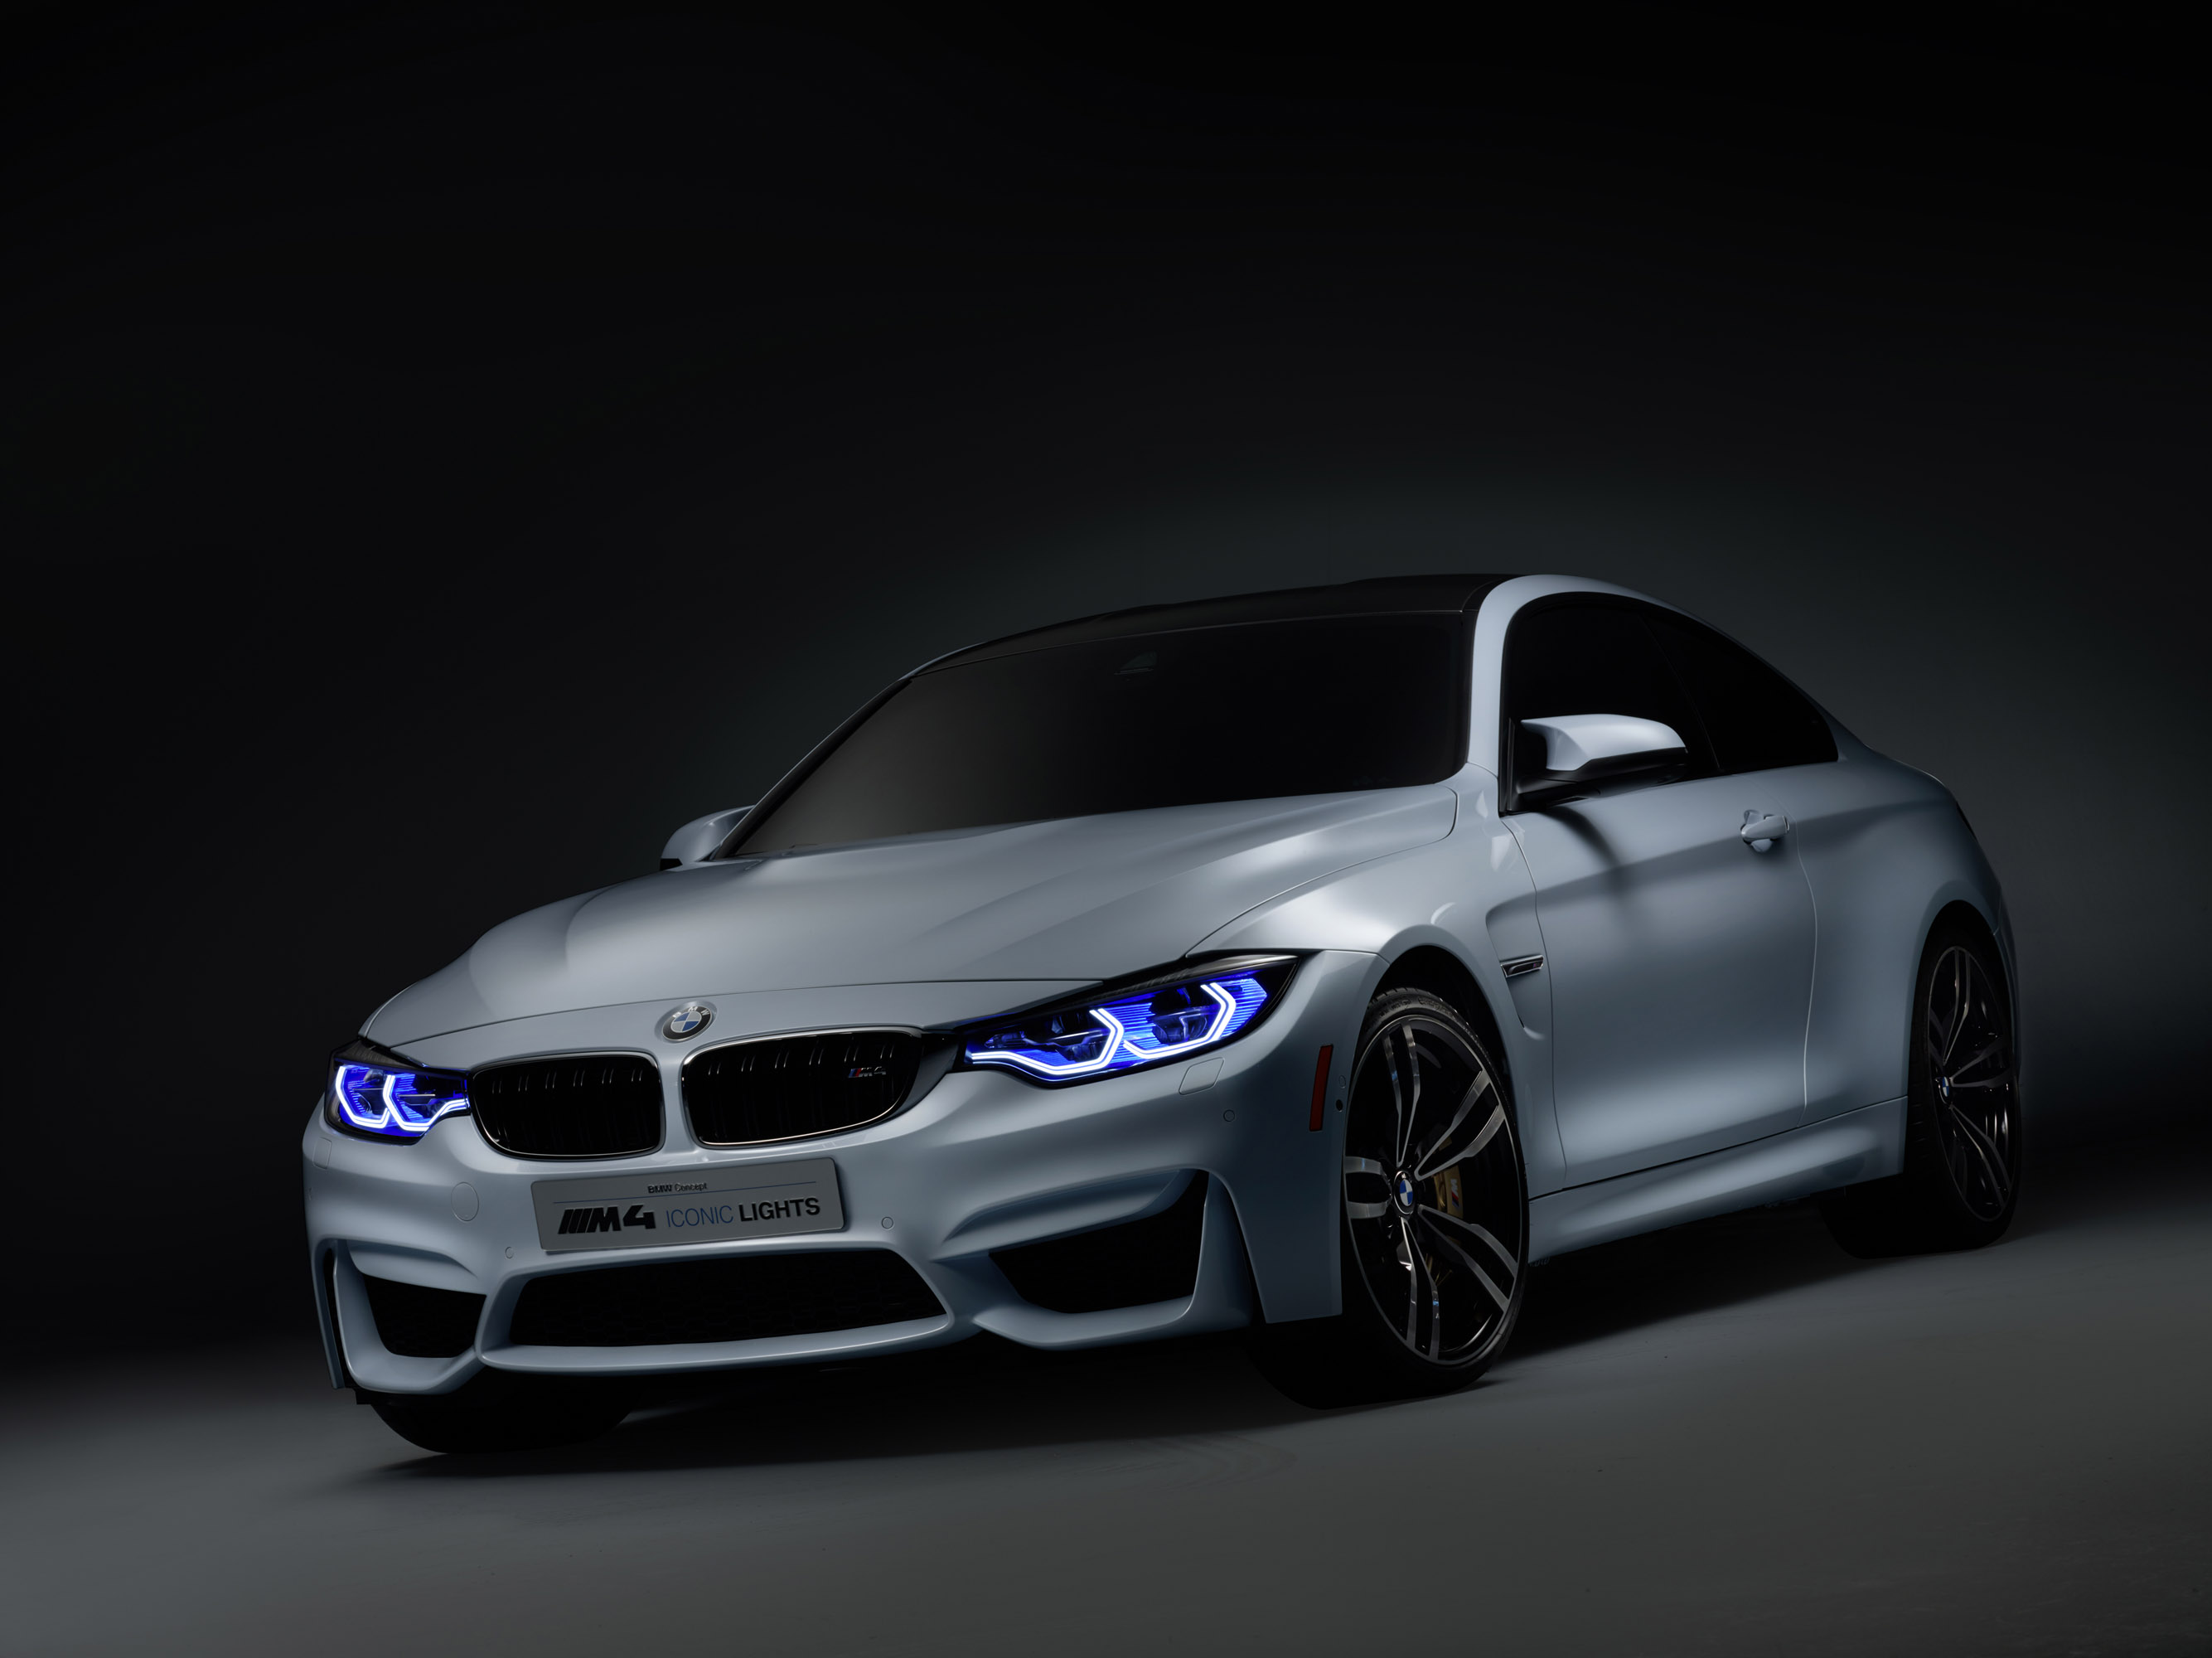 BMW M4 Iconic Lights Concept photo #1